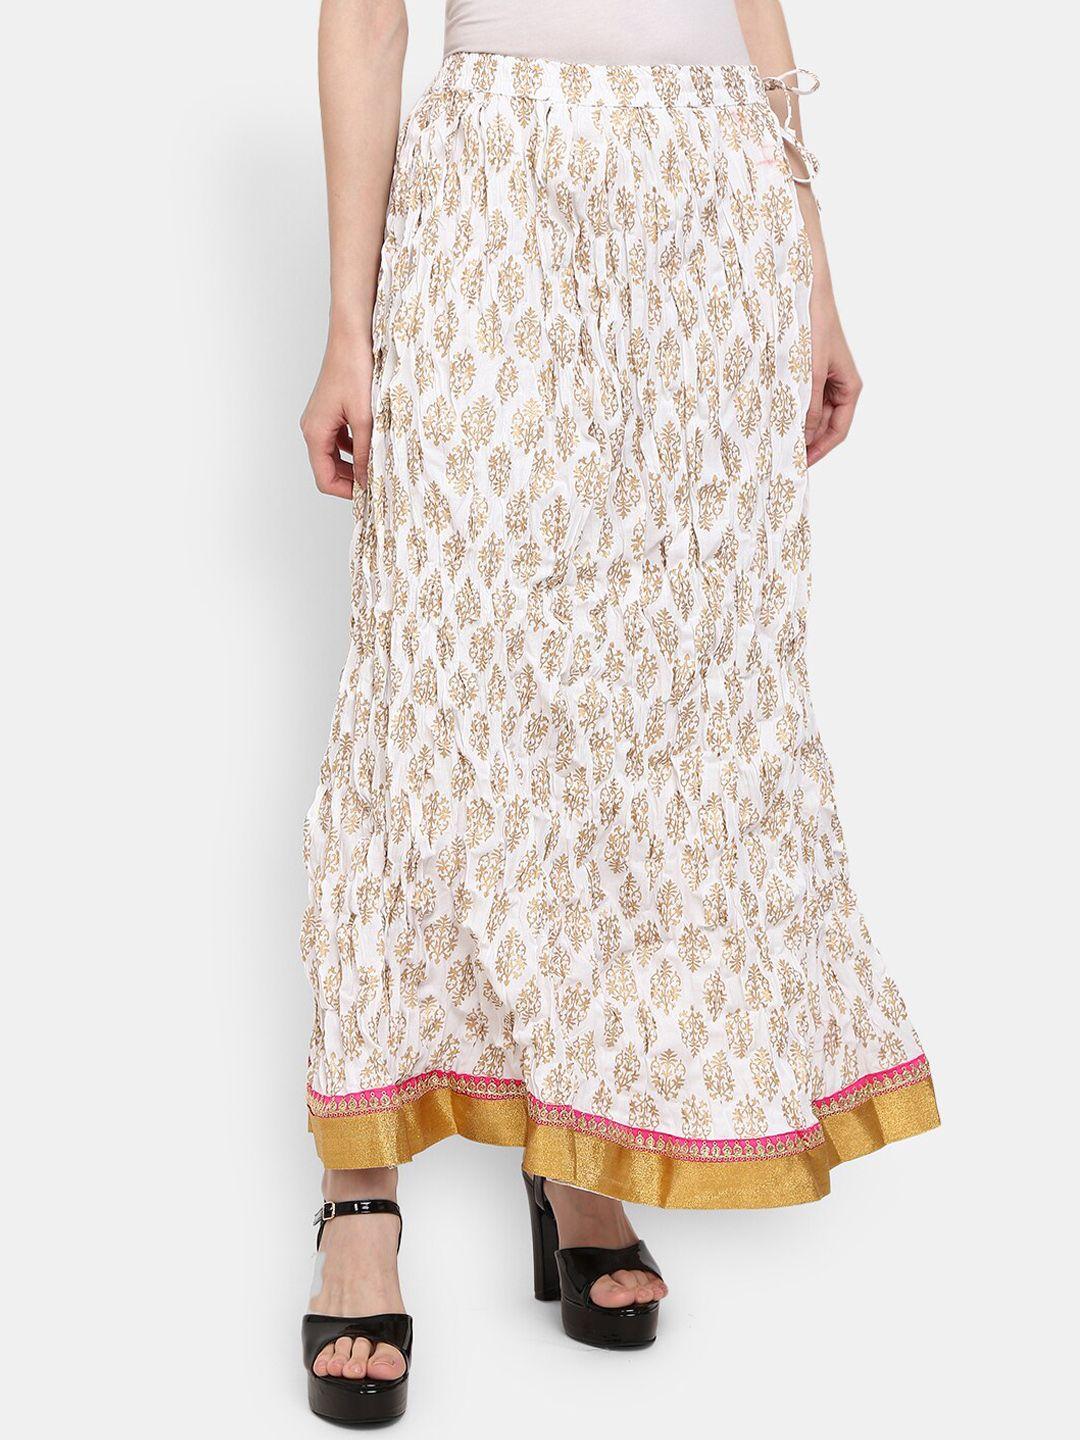 v-mart women white & gold toned ethnic floral motif printed skirt